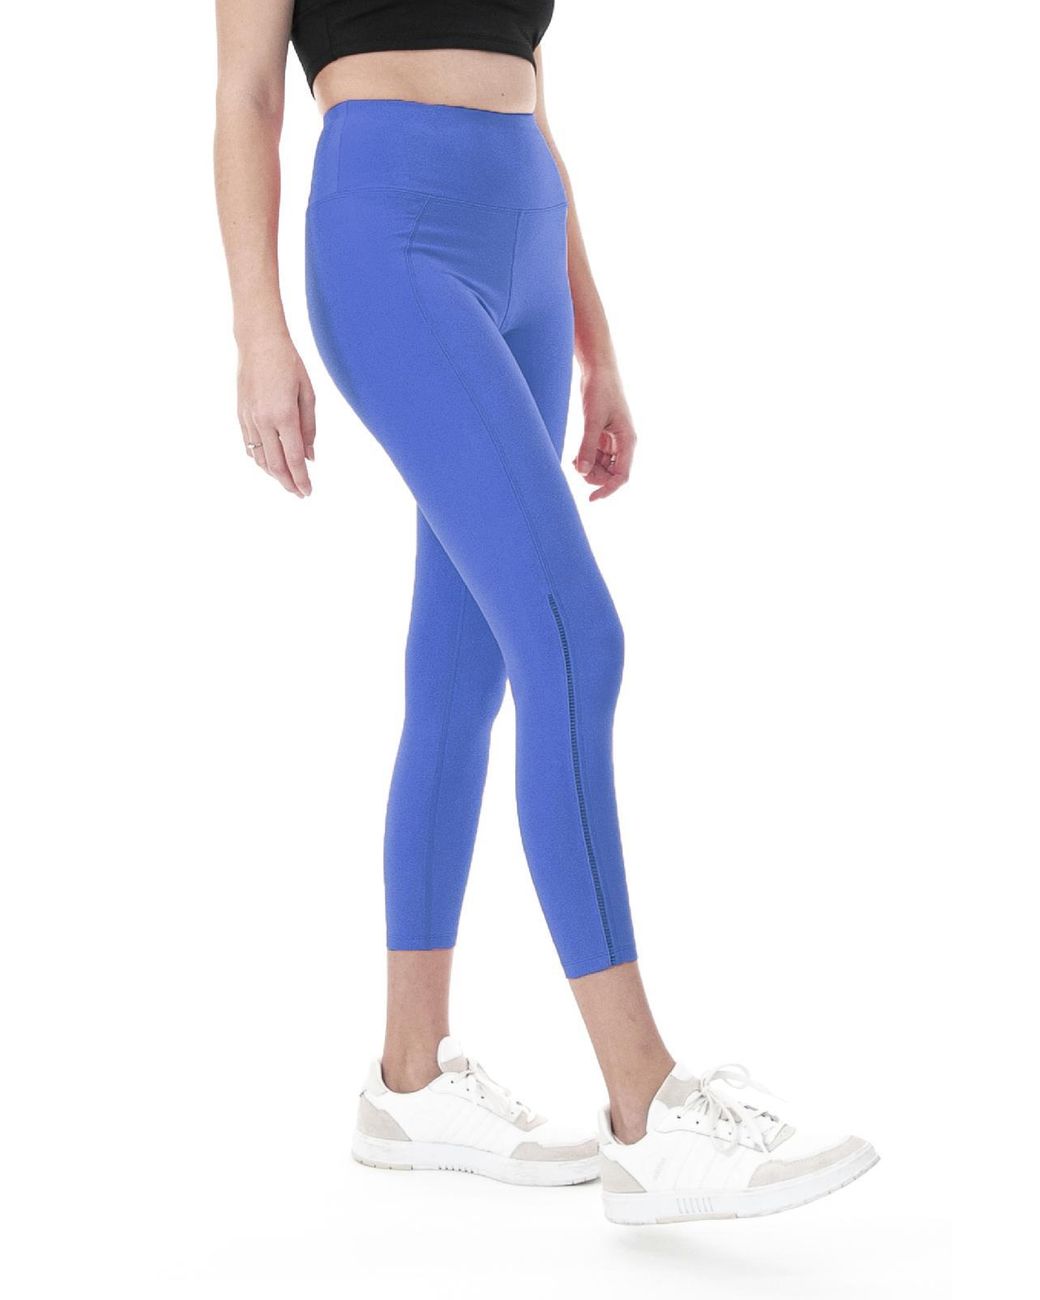 Nanette Lepore Compression Fitness Athletic Leggings in Blue | Lyst